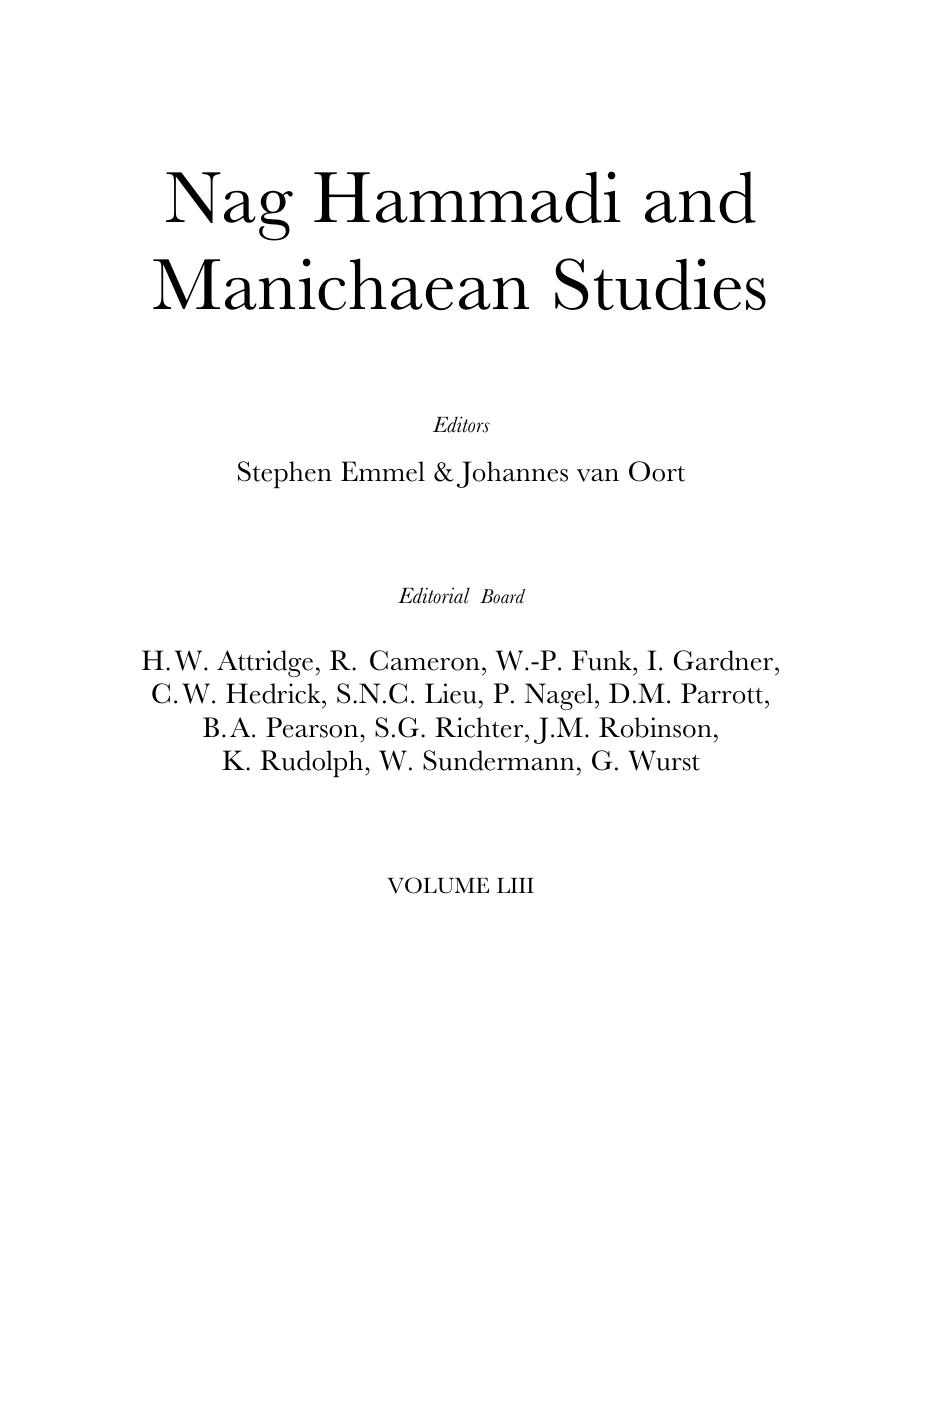 Nag Hammadi and Manichaean Studies